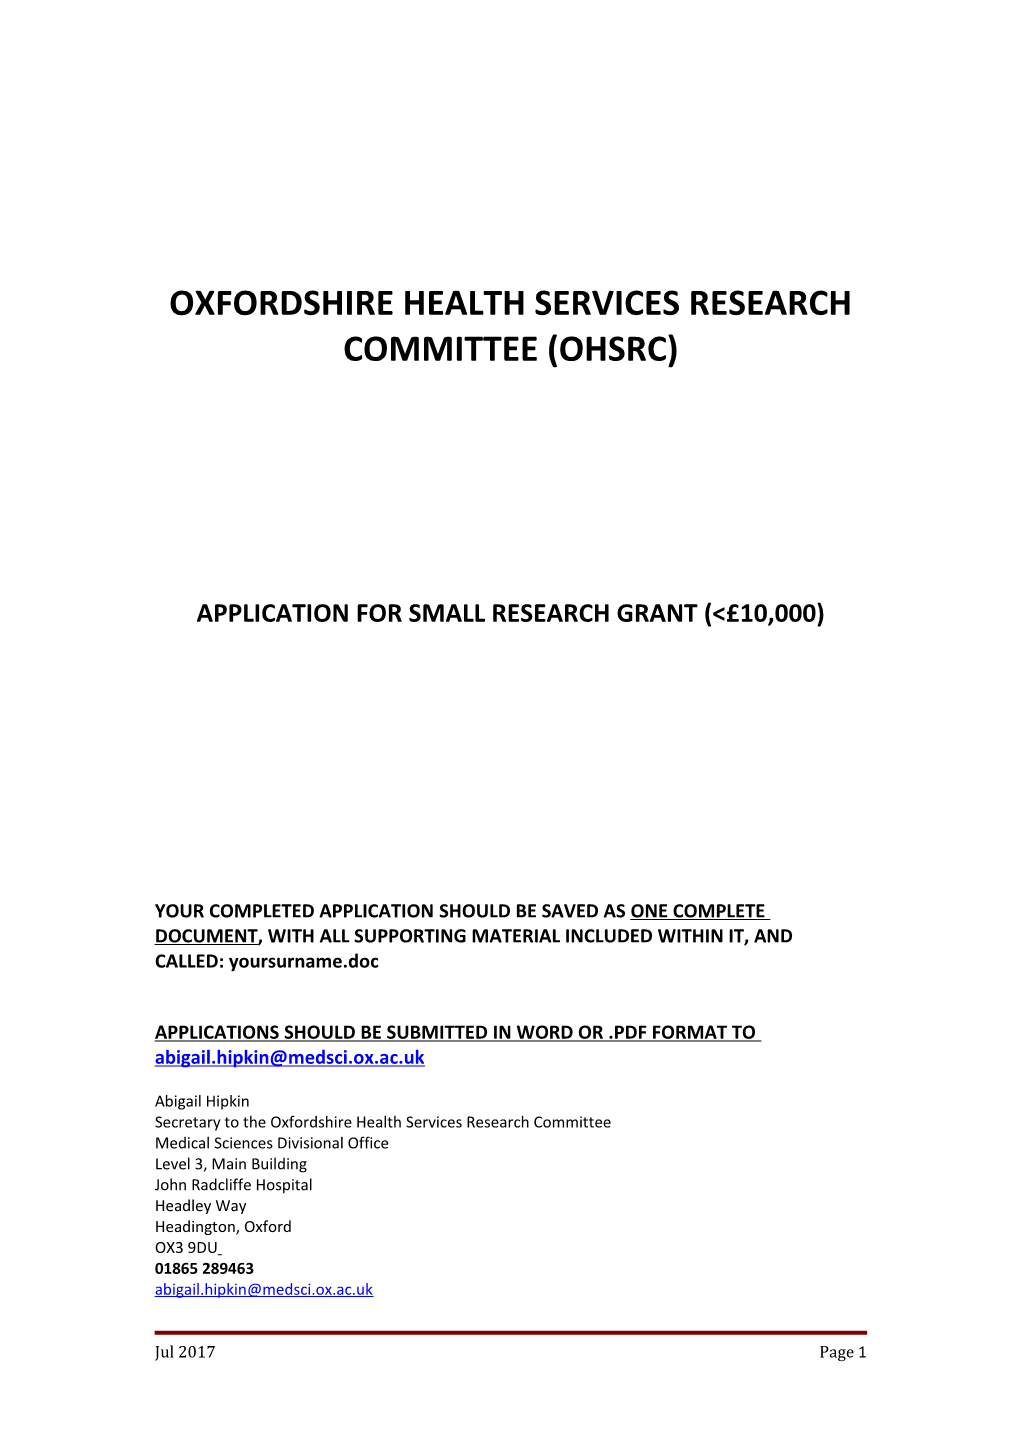 Oxfordshire Health Authority